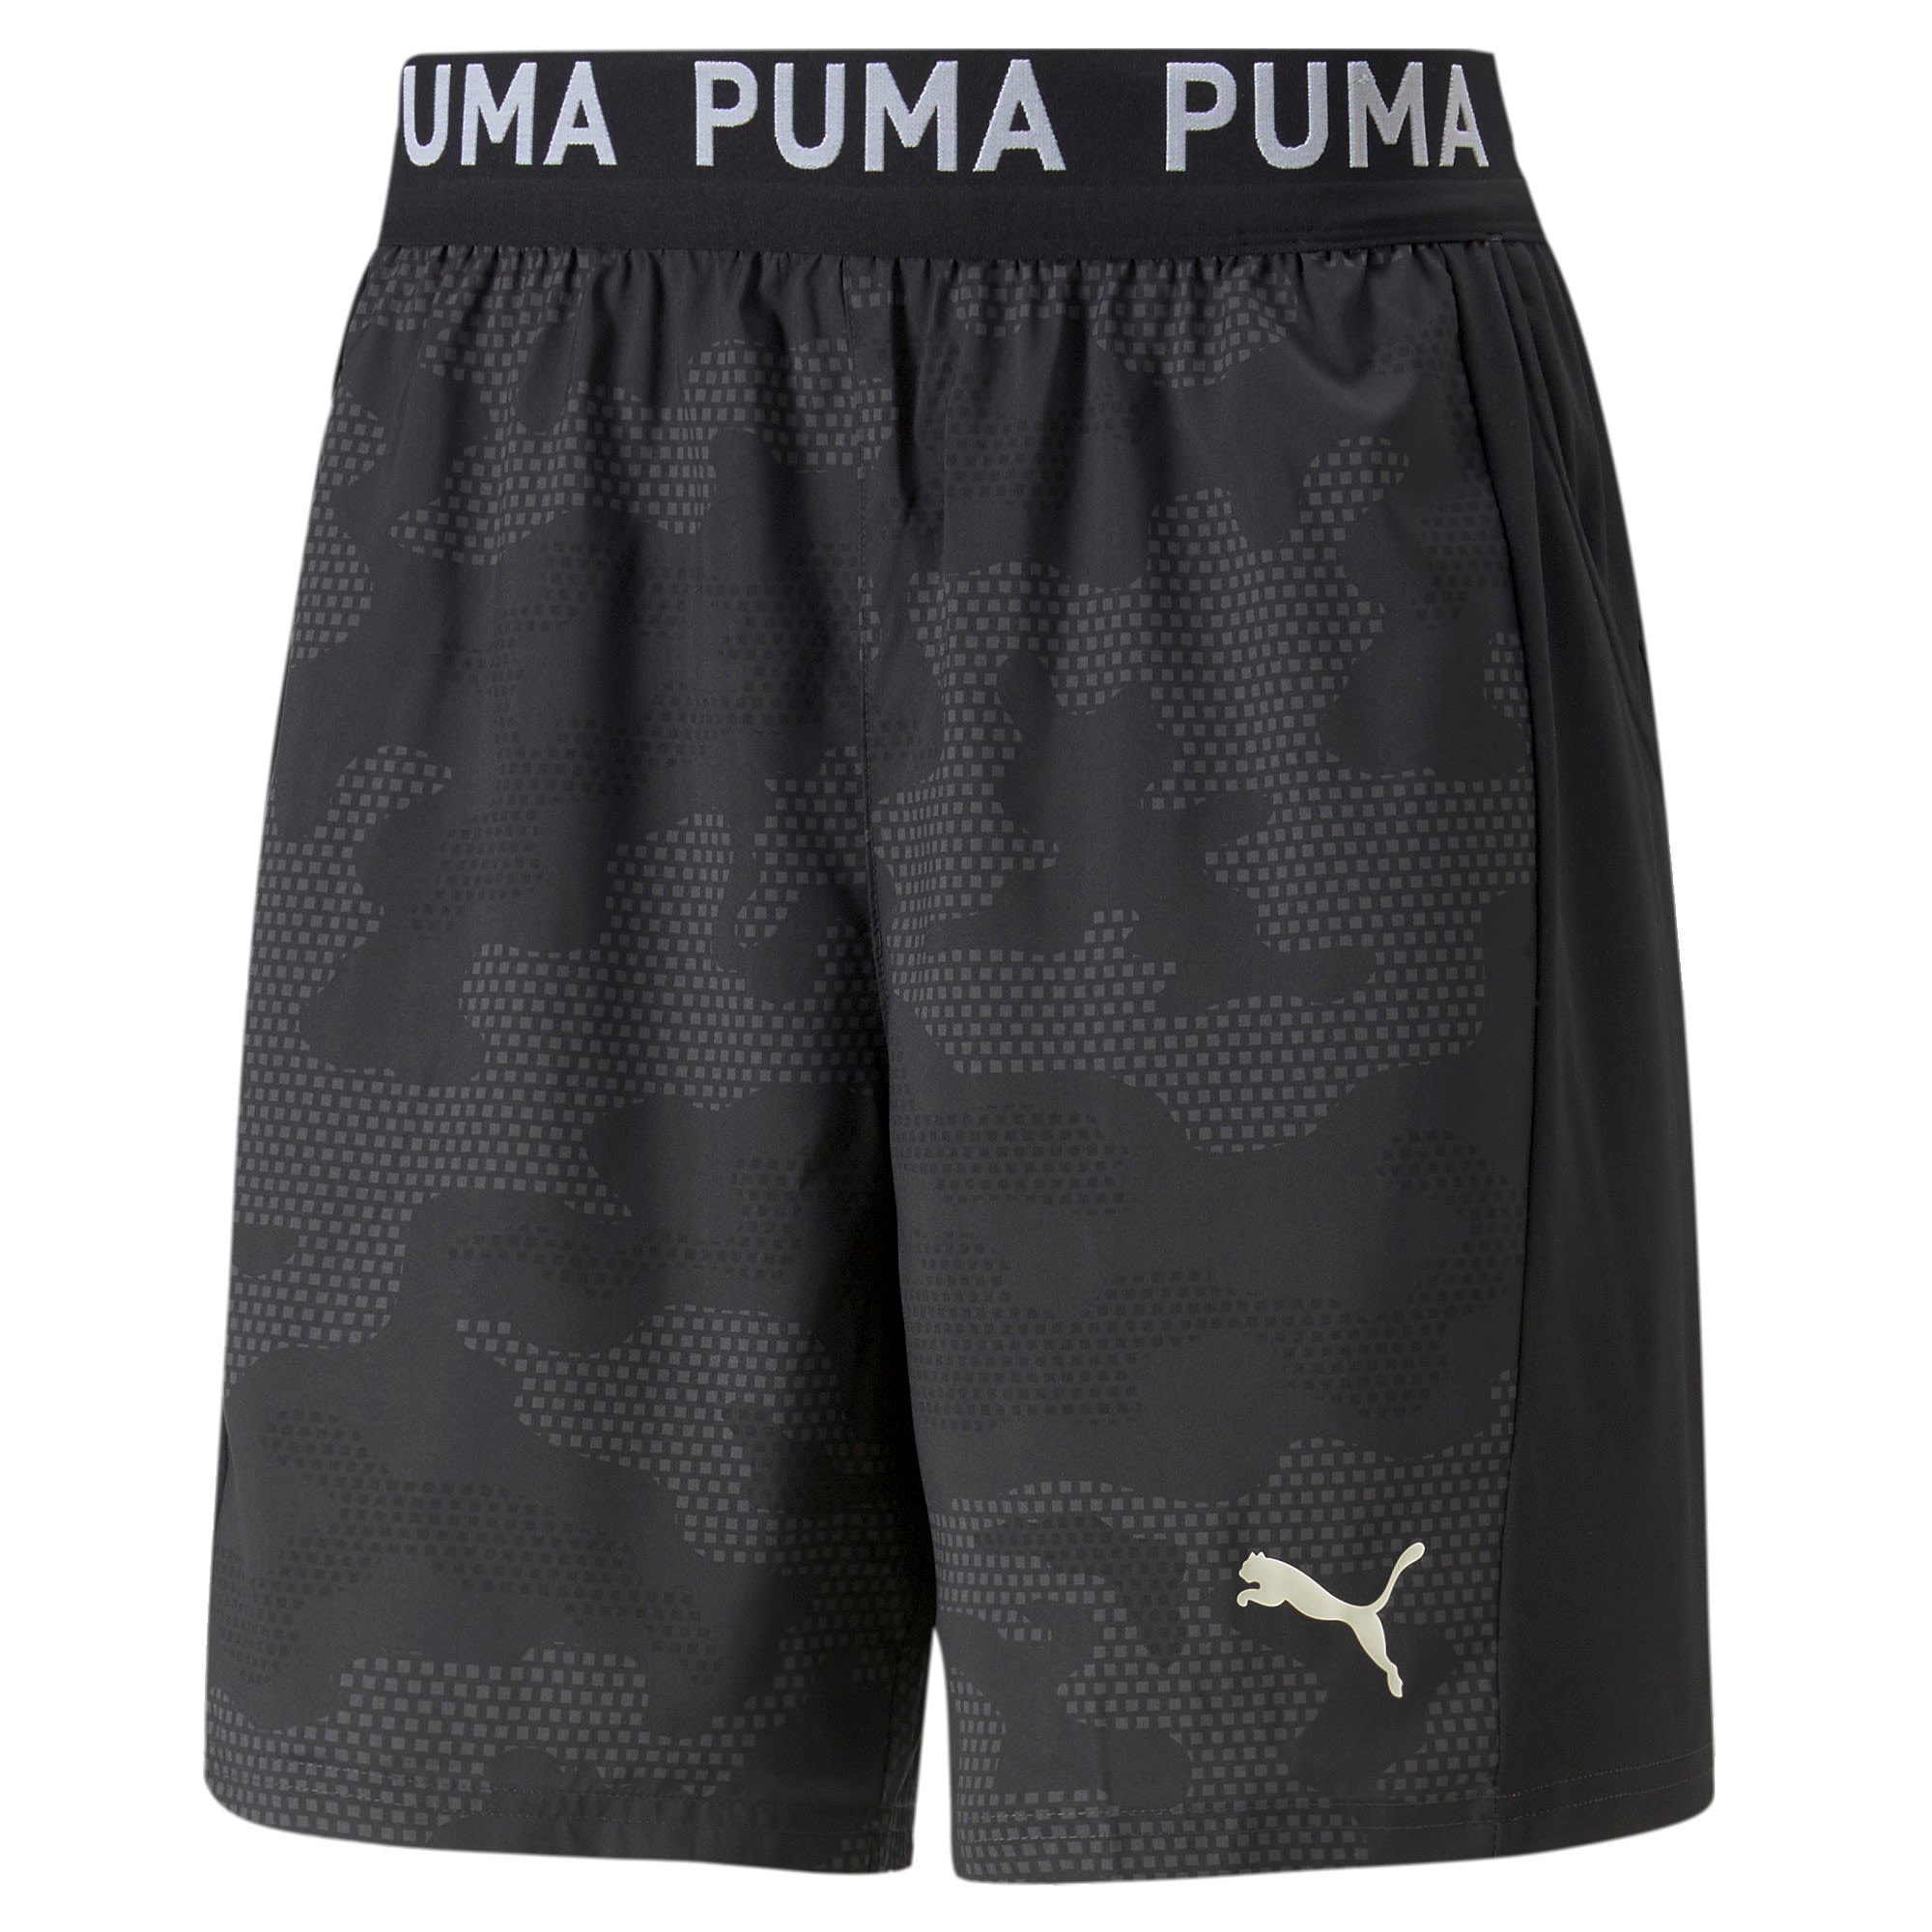 Puma Train Off Season AOP Woven 7 Short Schwarz- Male Shorts- Grsse S - Farbe Puma Black